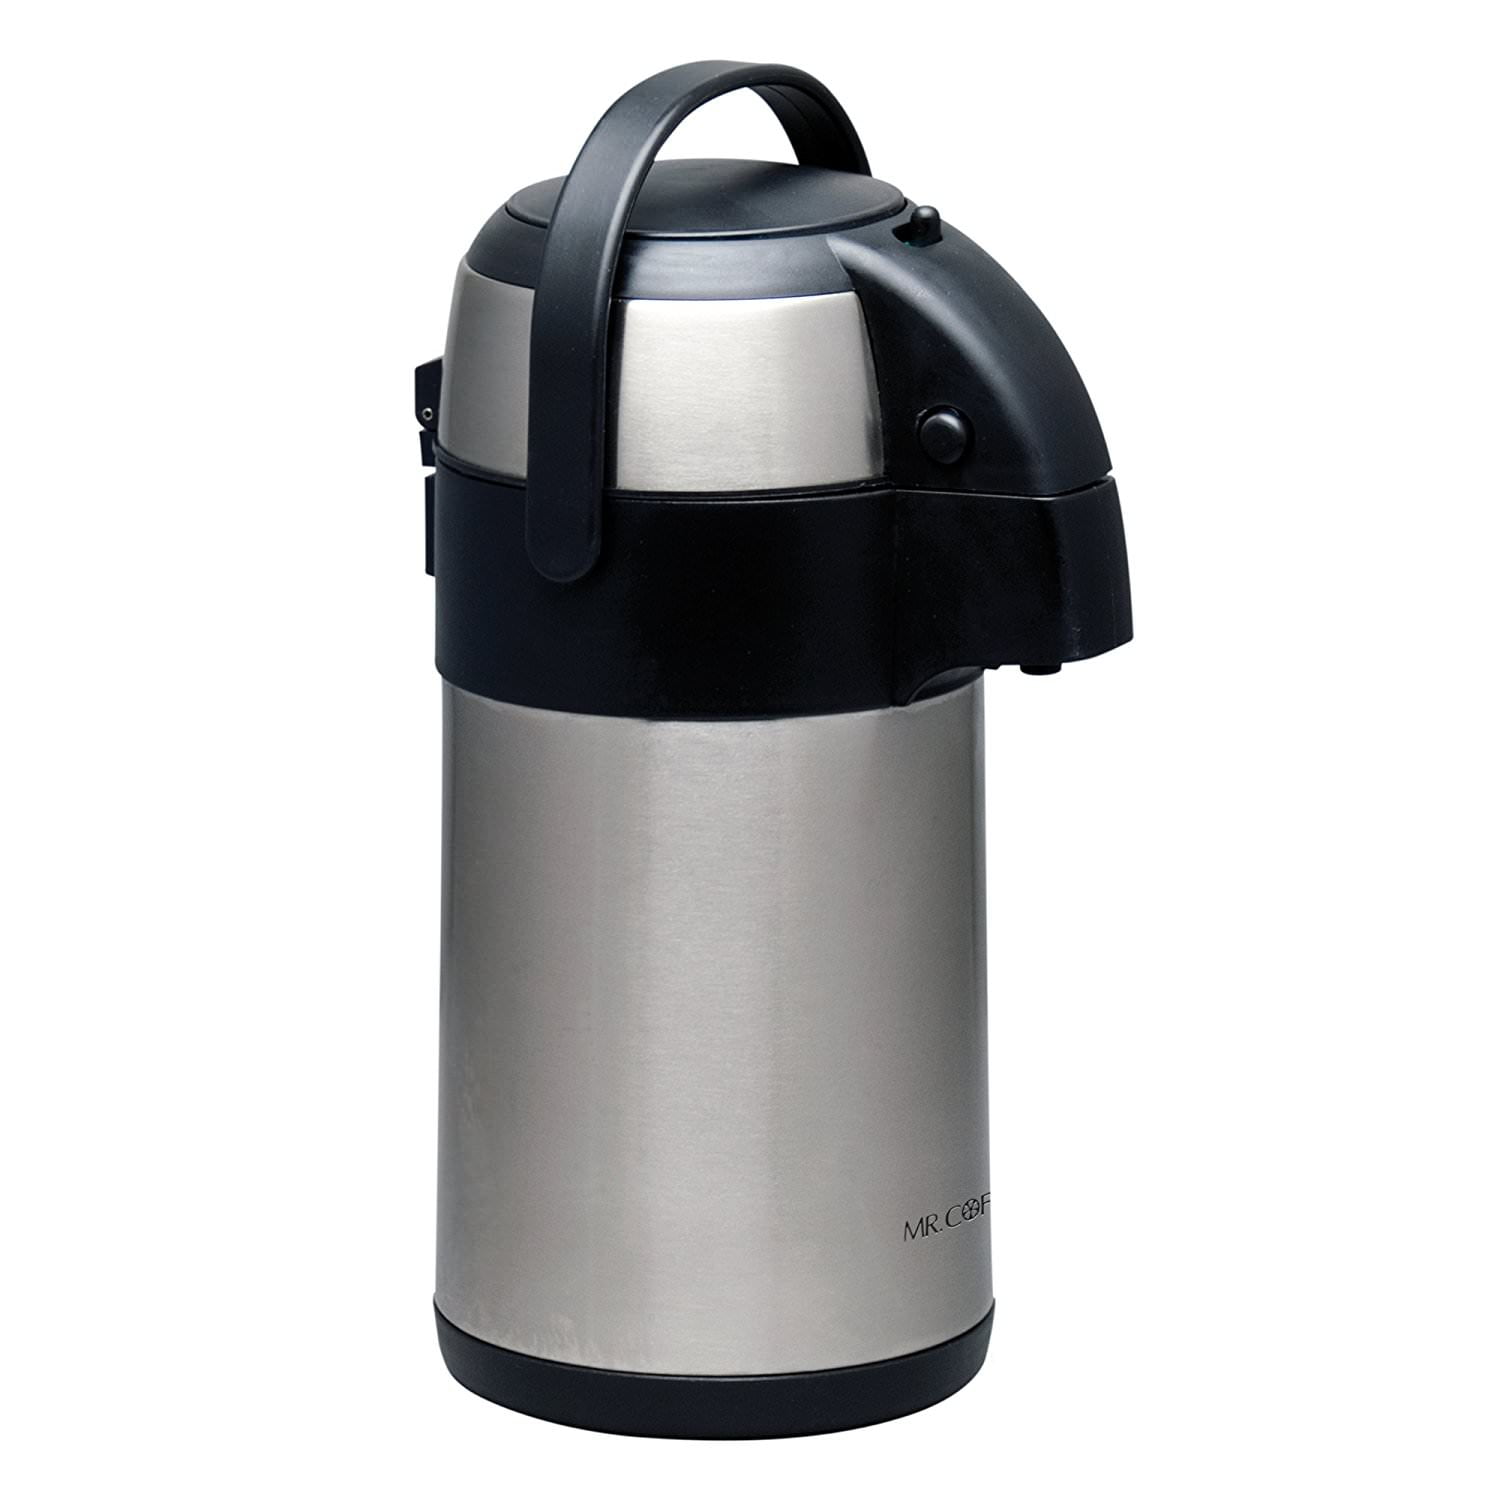 Mr. Coffee Stainless Steel Ever Flow Pump Pot - Walmart.com